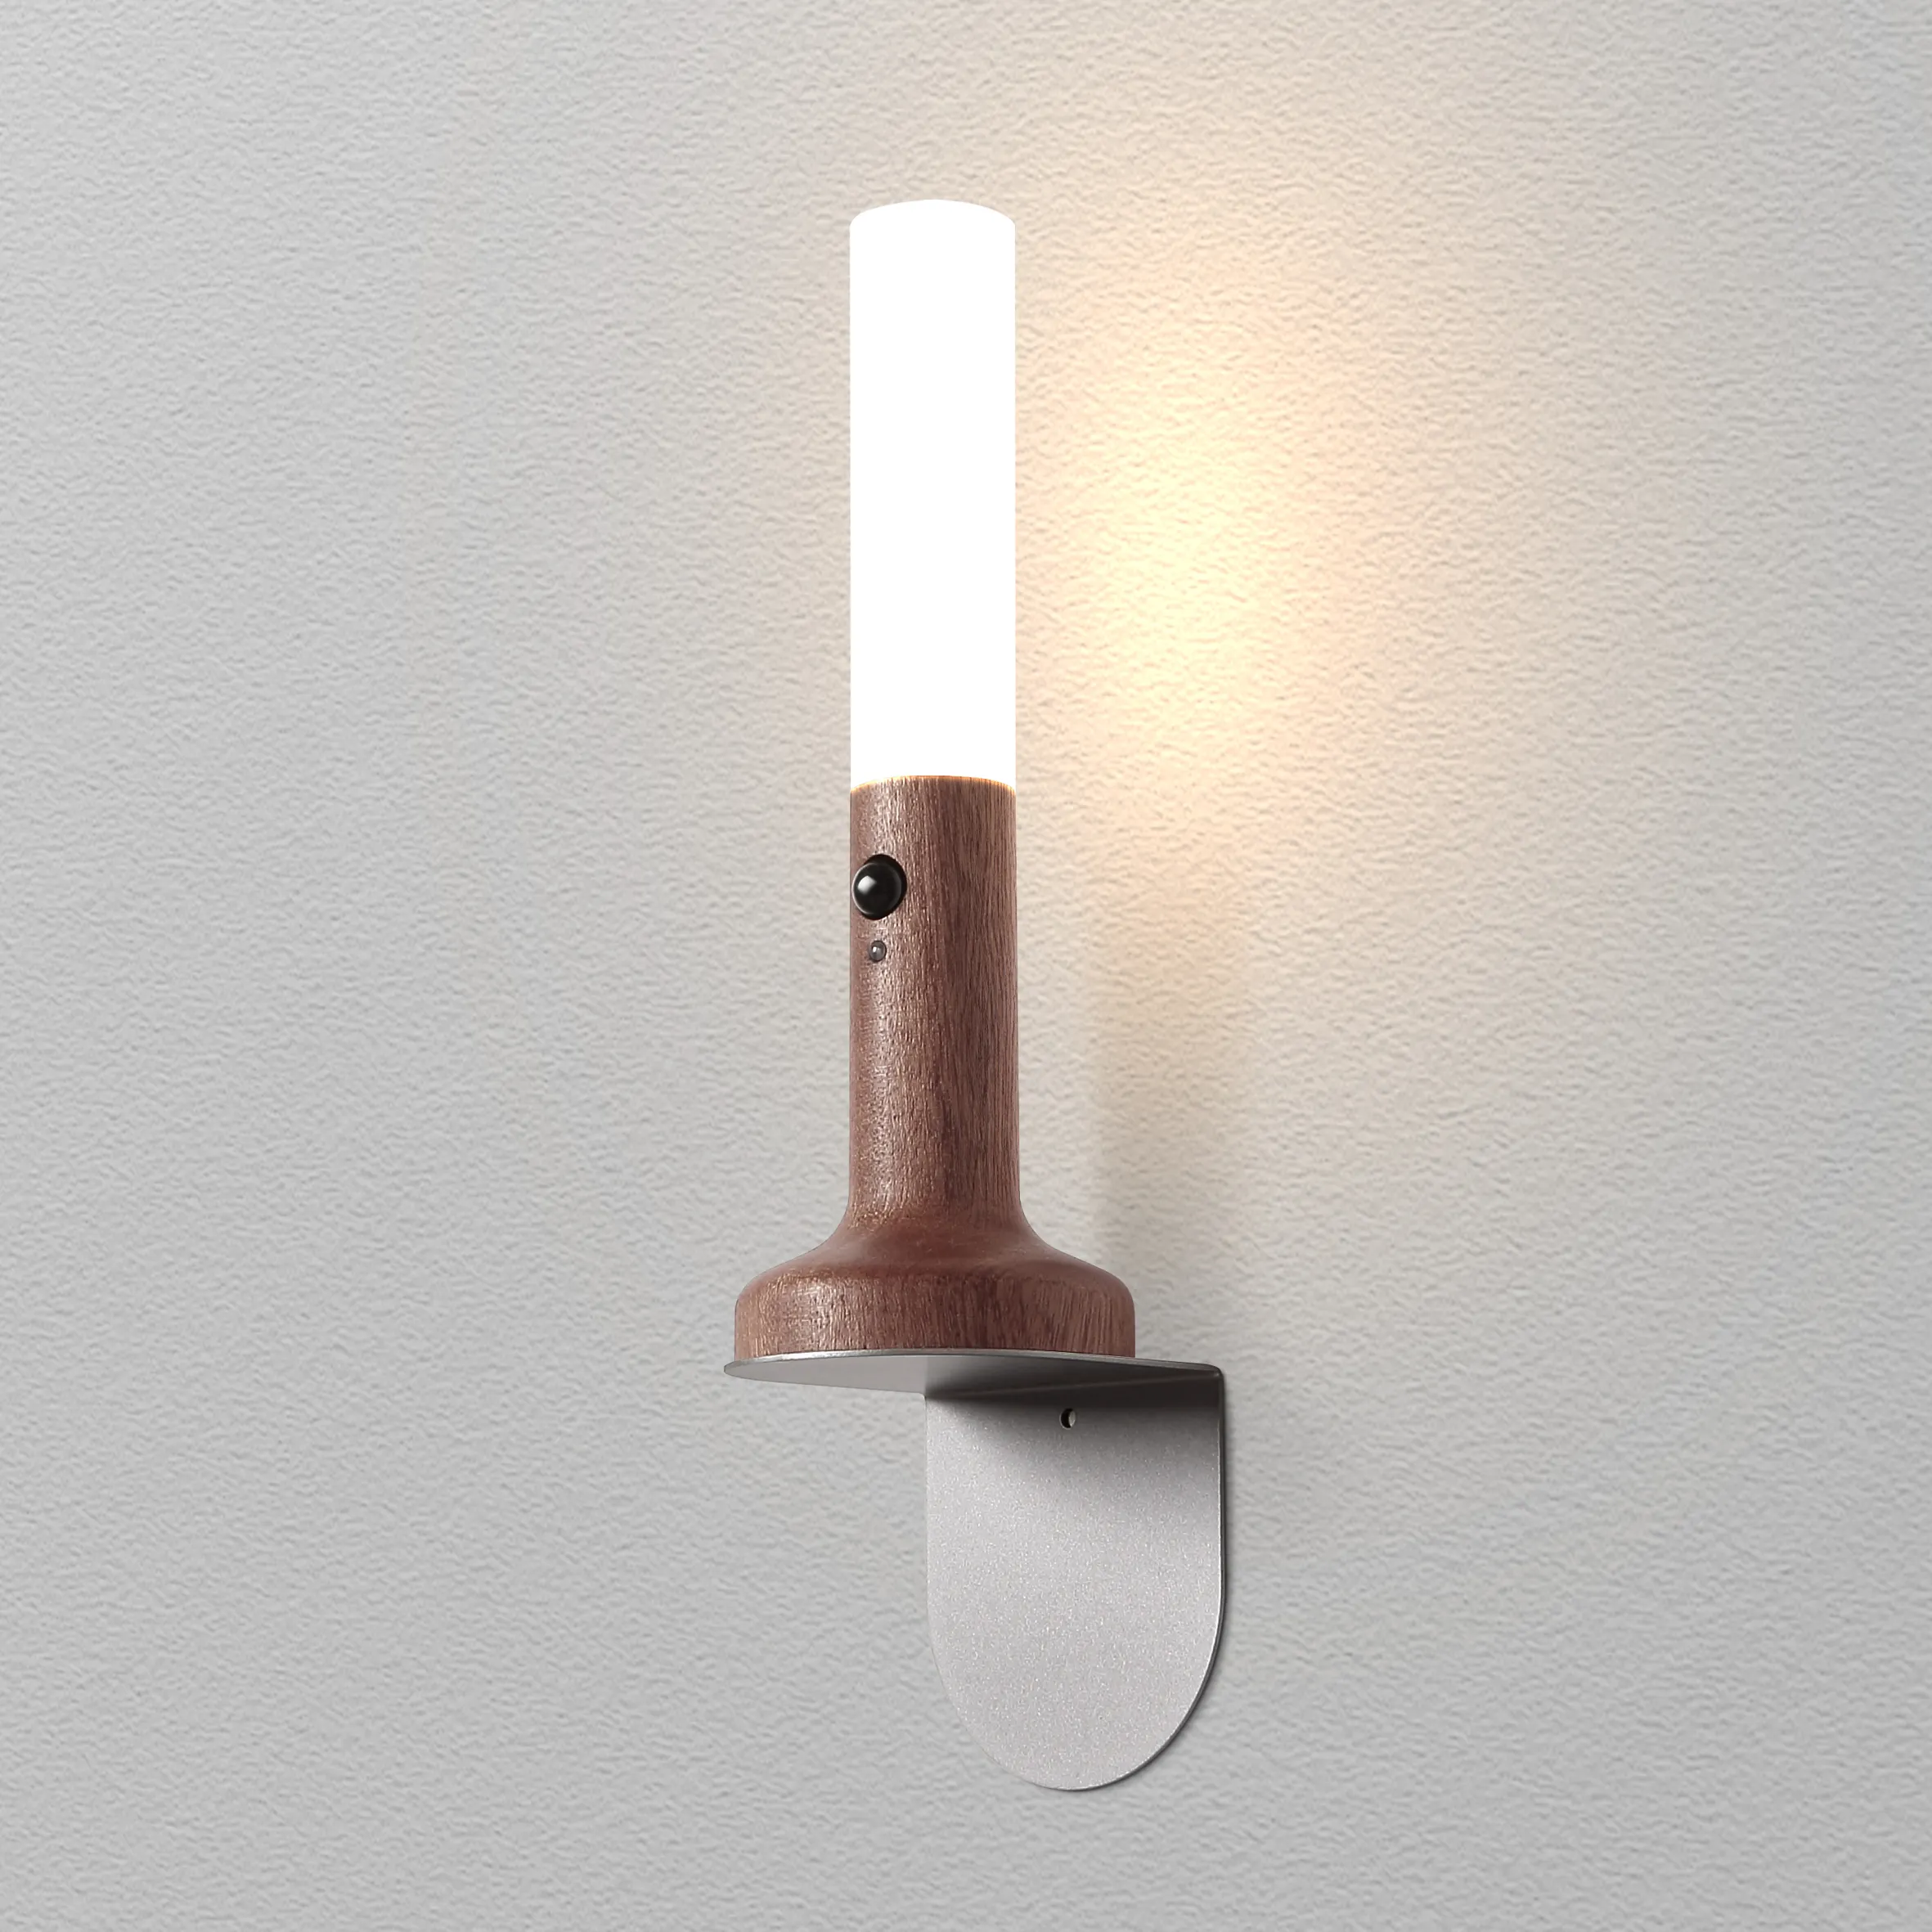 Sensor PIR magnético inteligente, luz nocturna de pie de madera, lámpara de pared recargable, luz de pared LED portátil con Sensor de movimiento para interiores para el hogar